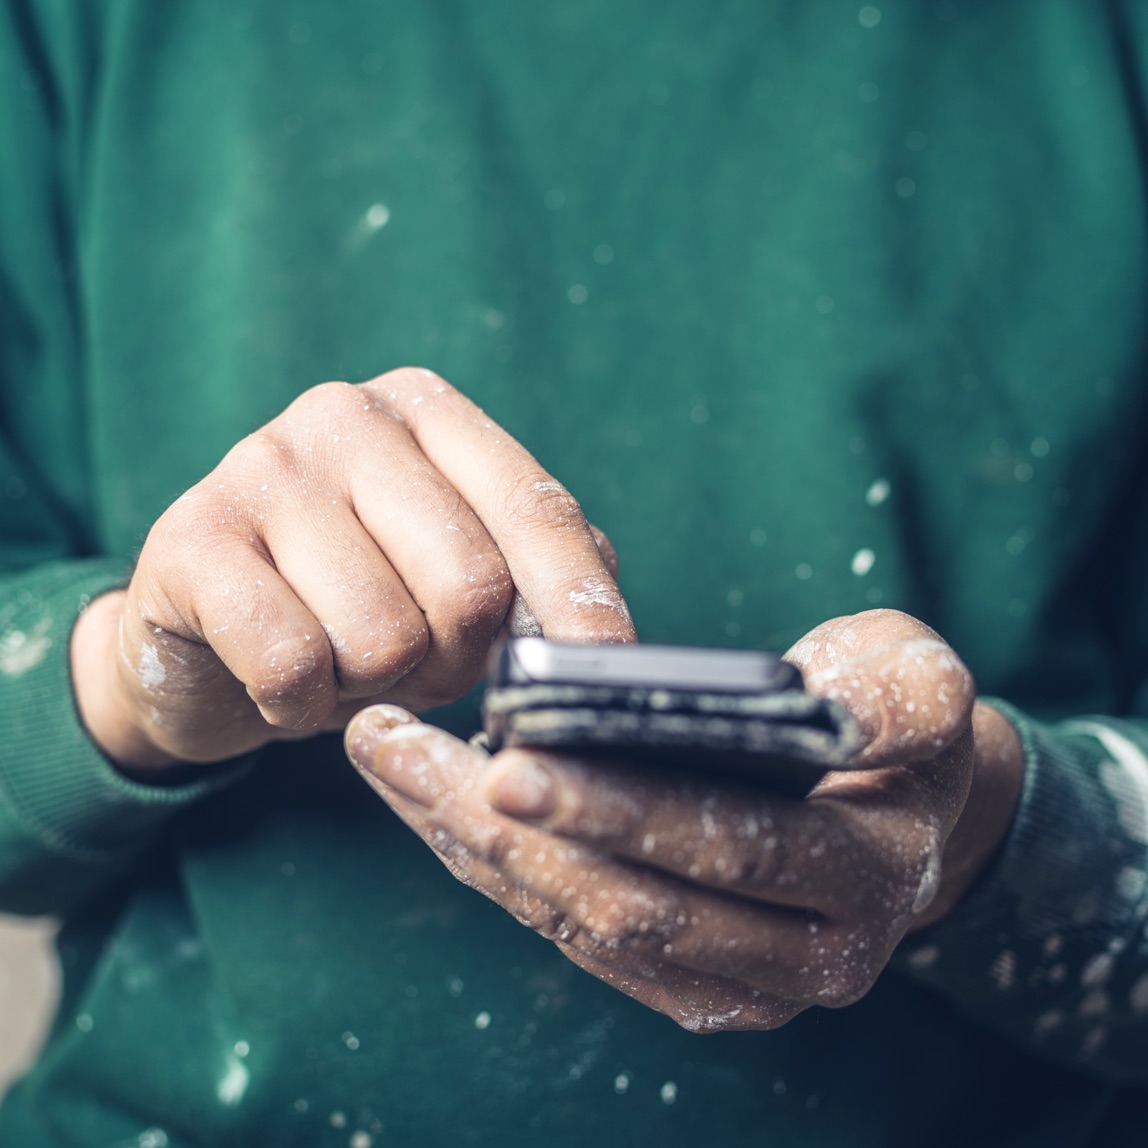 Imagen de manos cubiertas con salpicaduras de pintura usando un teléfono inteligente para buscar algo